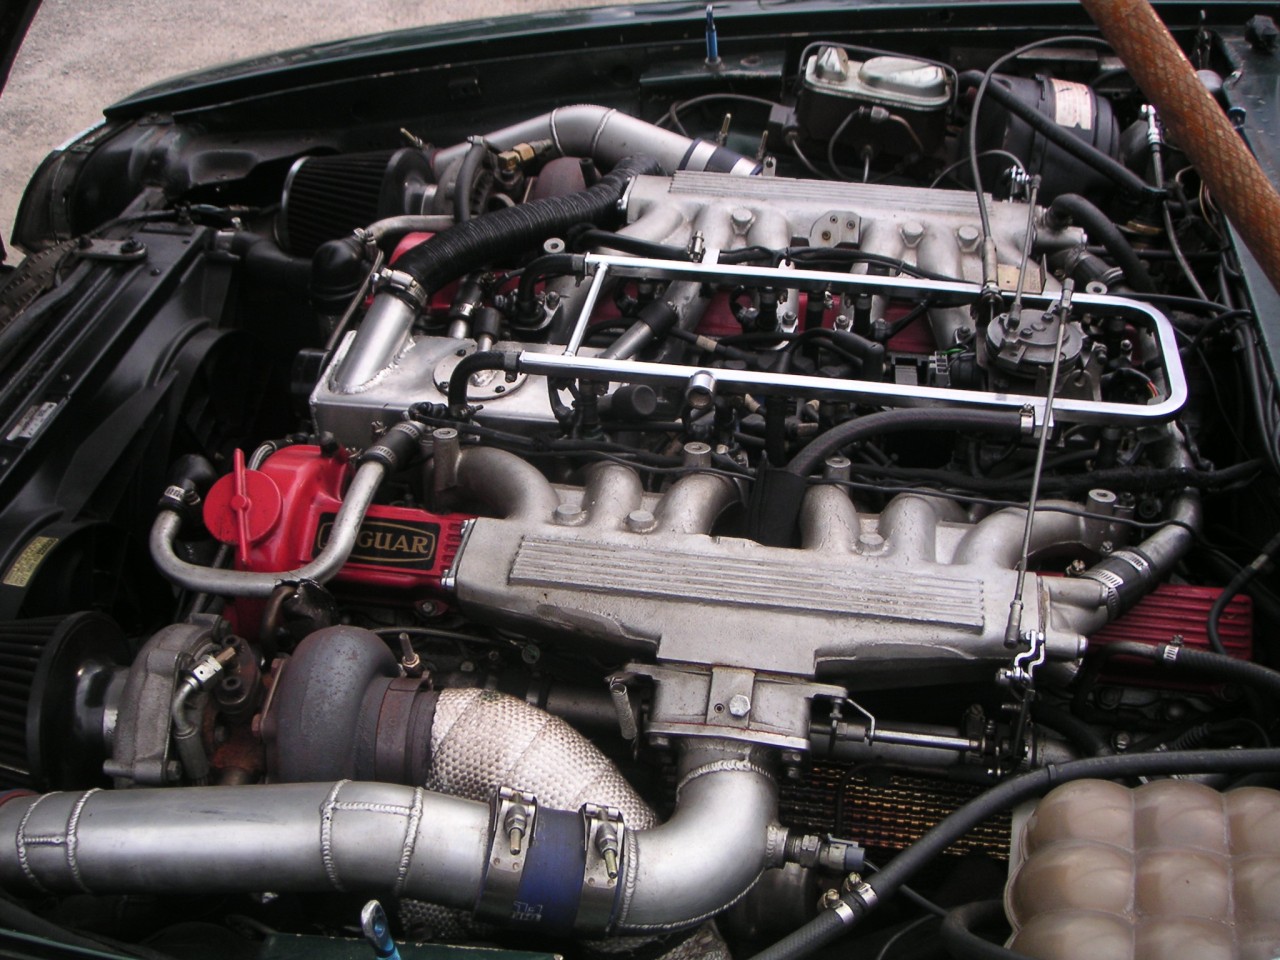 Look at this sexy beast - Jaguar Forums - Jaguar ... jaguar xk8 engine diagram 